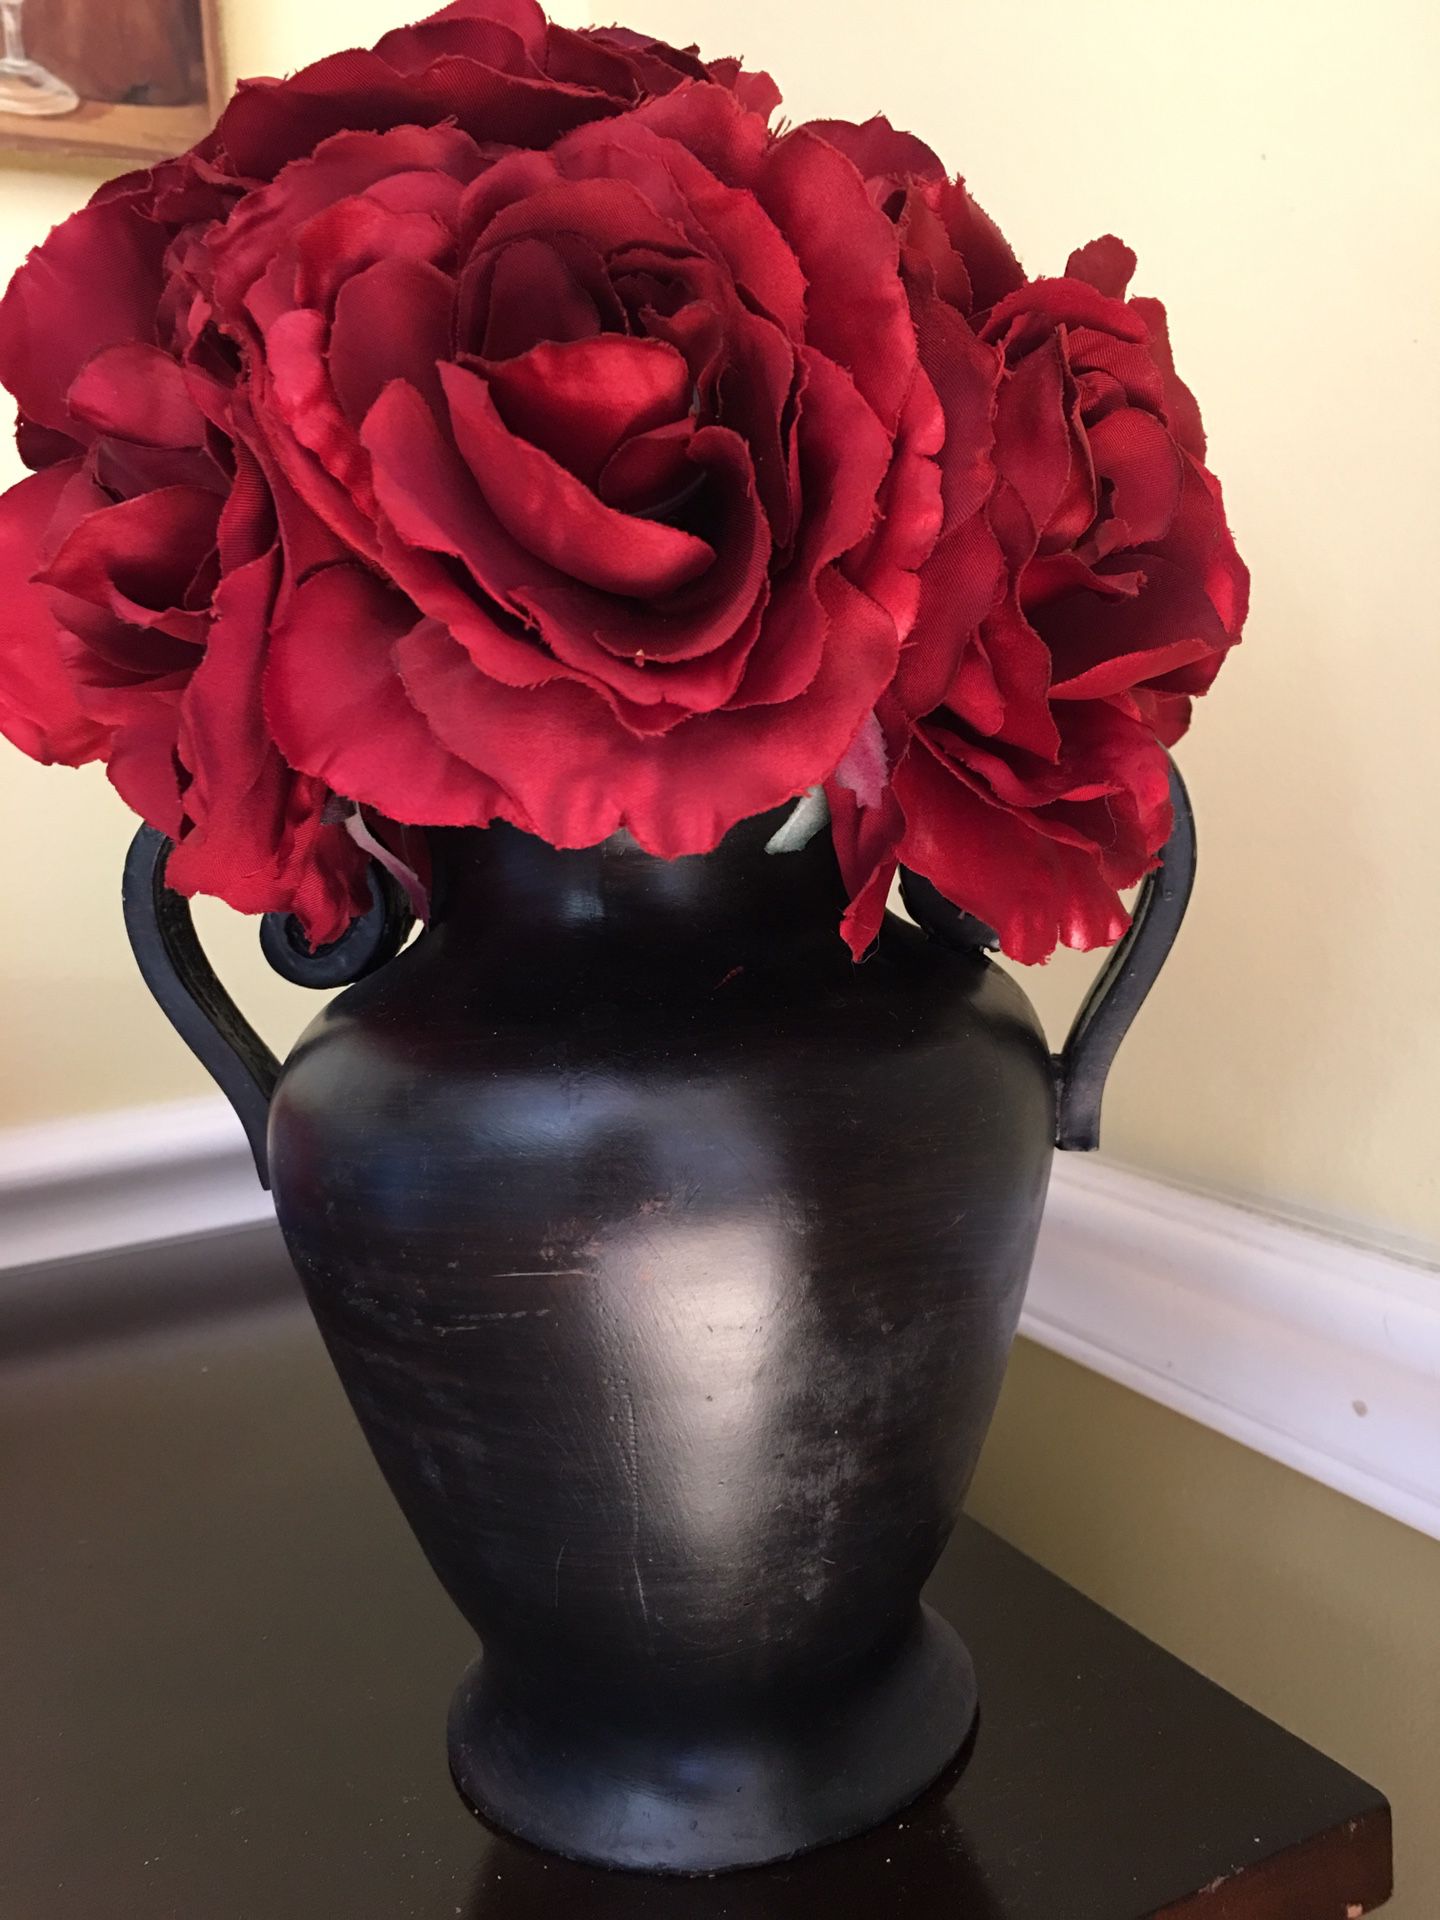 Decorative vase and flowers